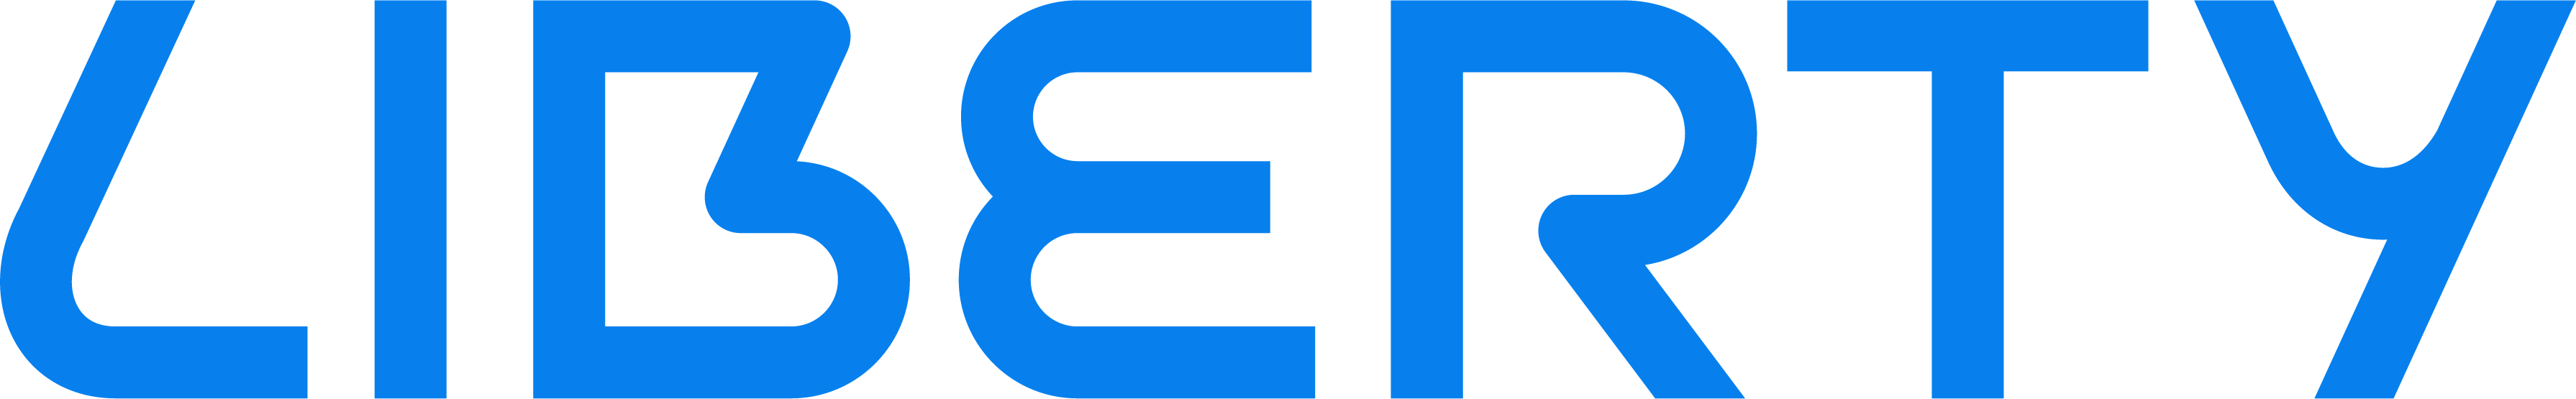 Angular Elements Logo